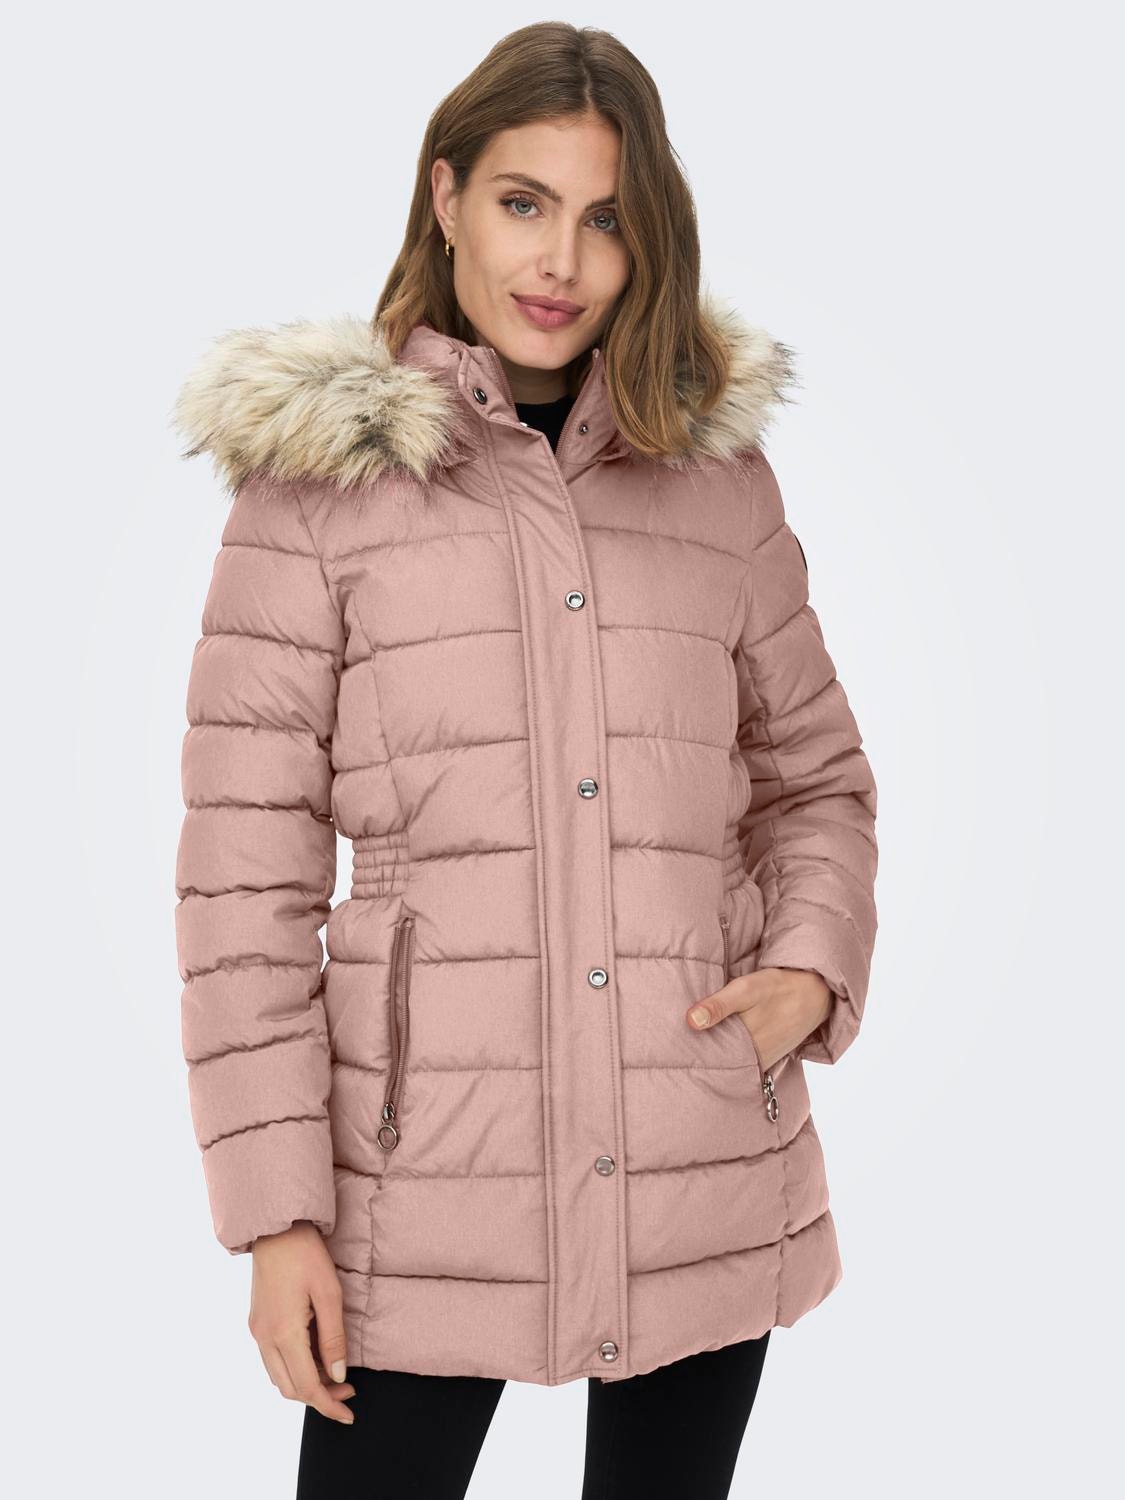 Fur hood  Fur hood jacket, Puffer coat with fur, Winter faux fur coat